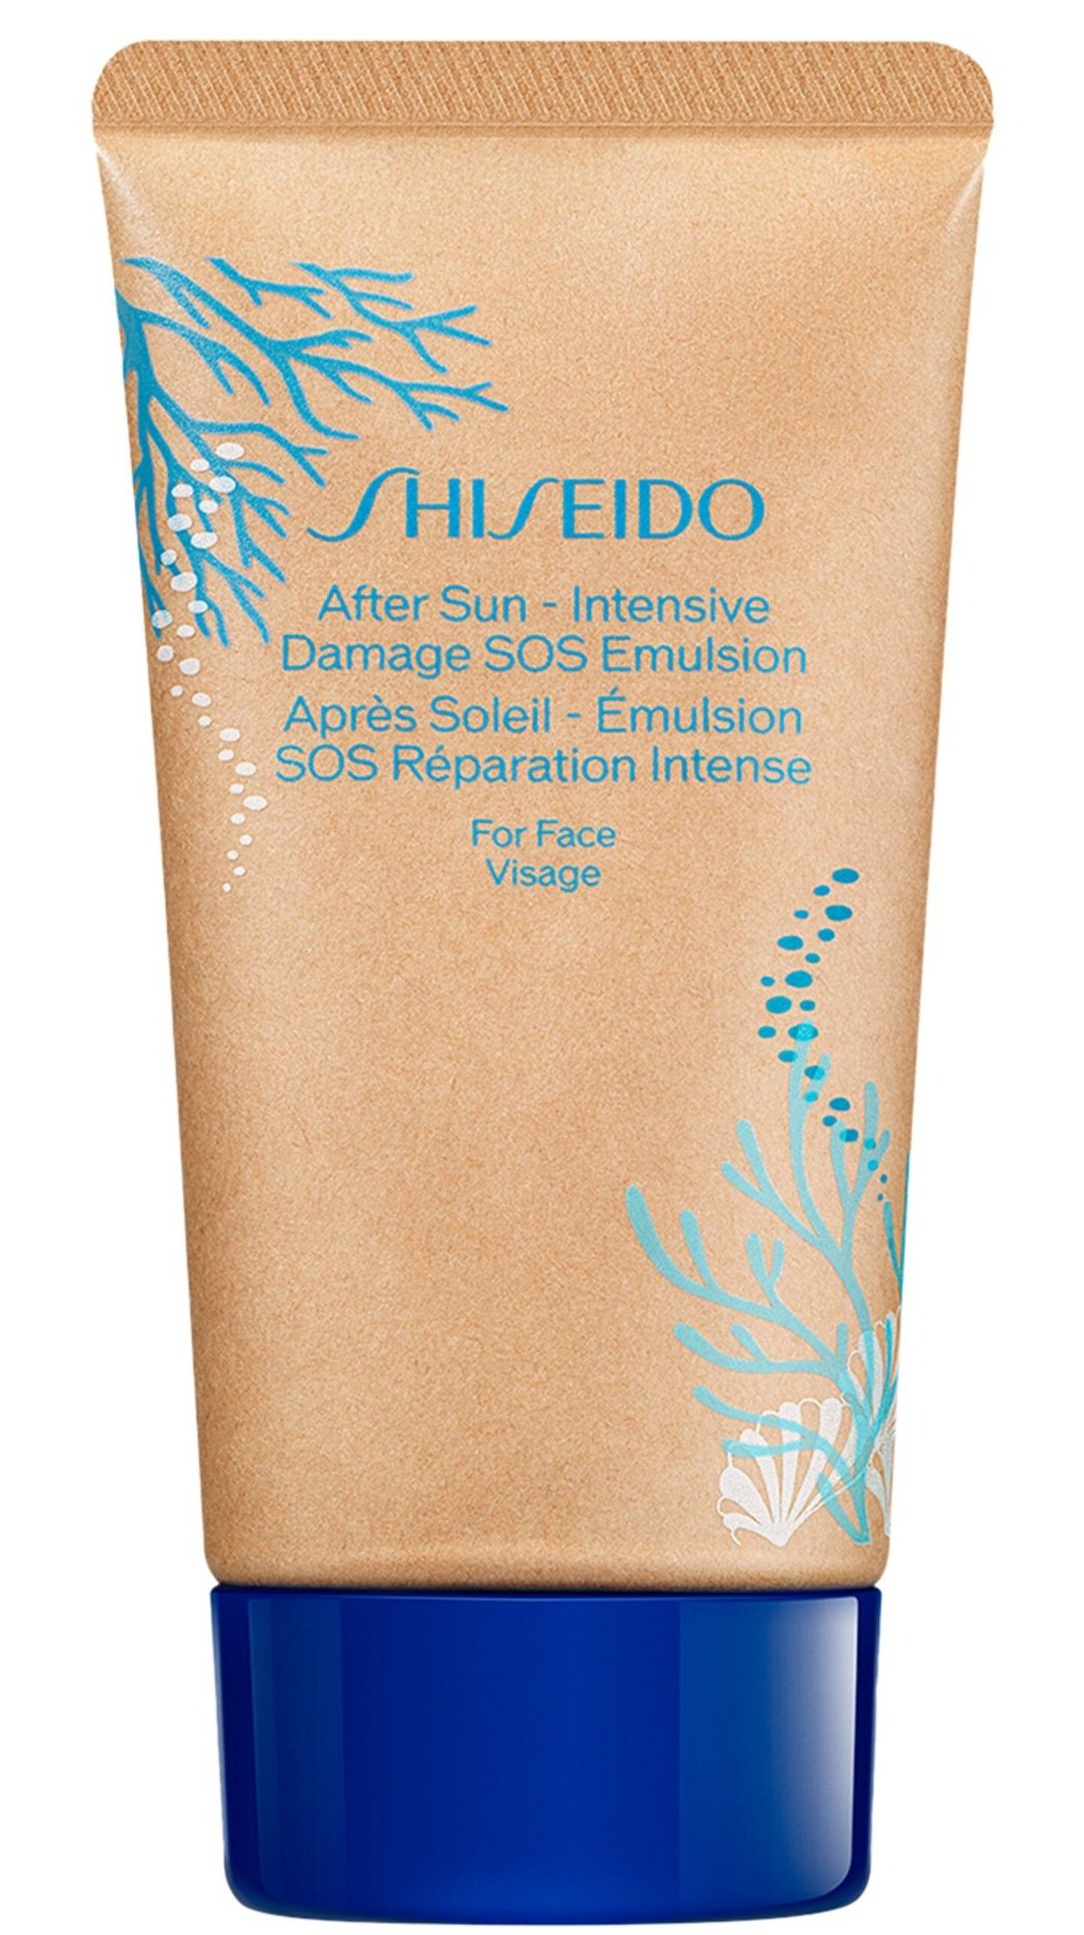 Shiseido After Sun - Intensive Damage SOS Emulsion